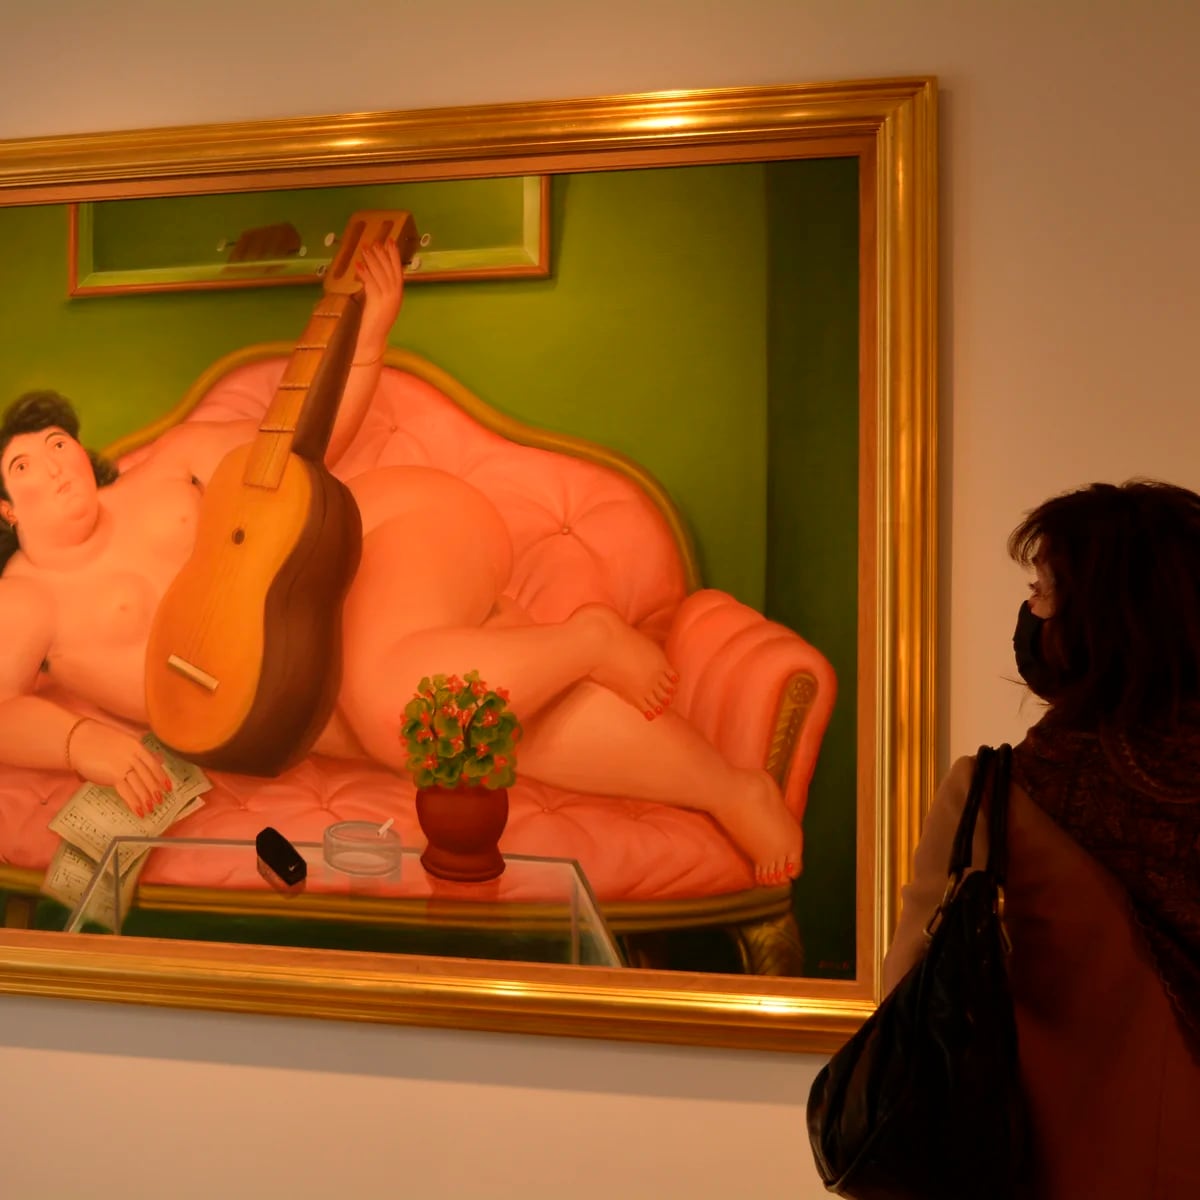 Subastado en París un cuadro del pintor colombiano Botero por 920.000 euros  - Infobae